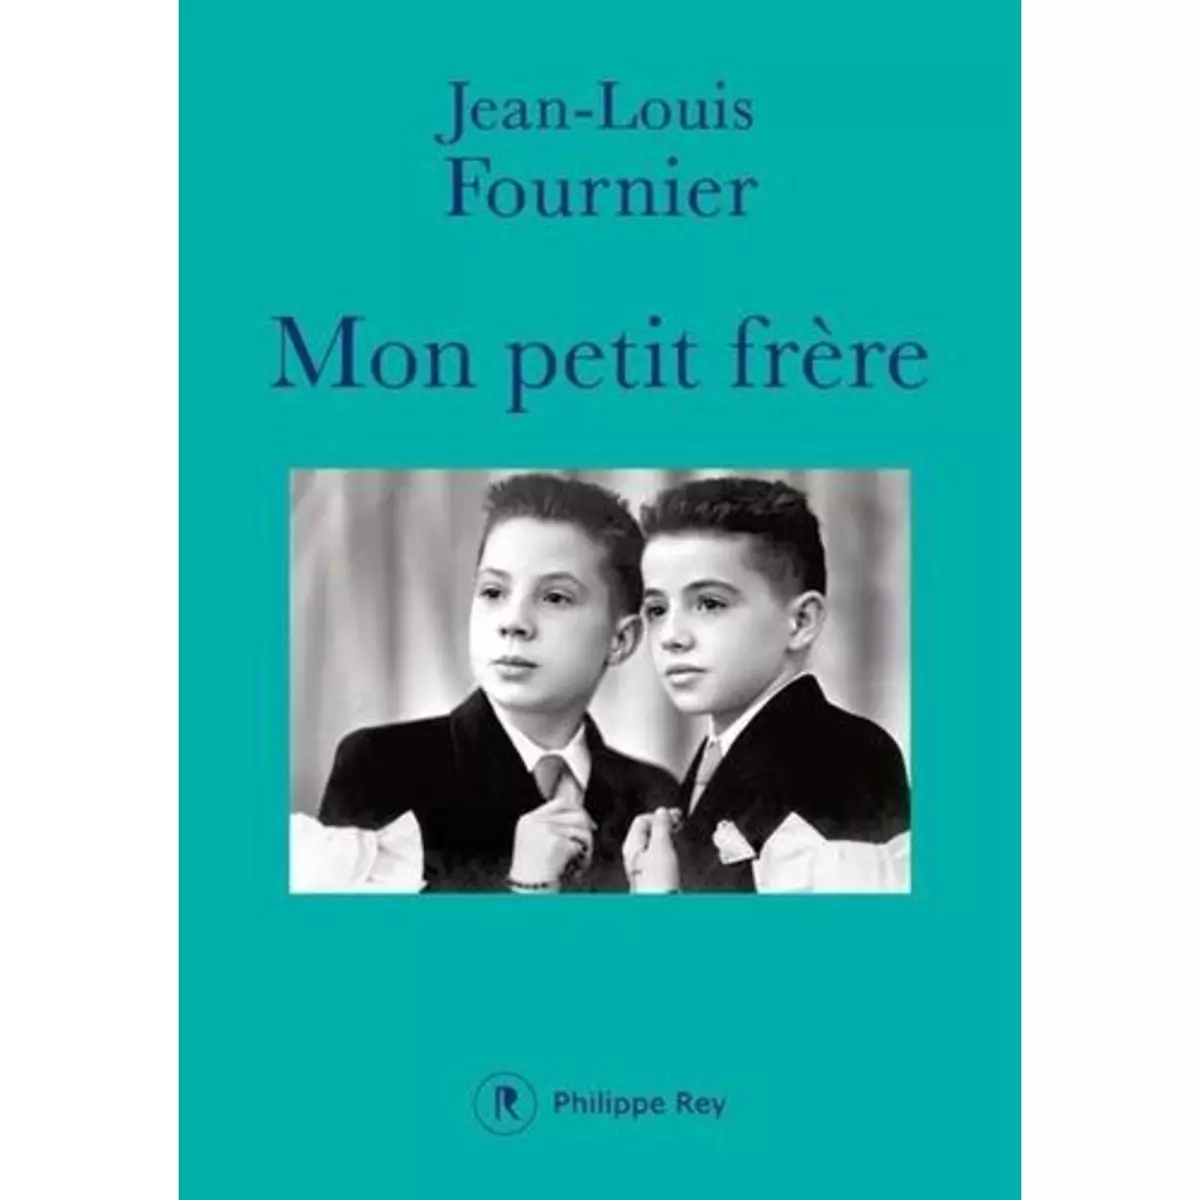  MON PETIT FRERE, Fournier Jean-Louis